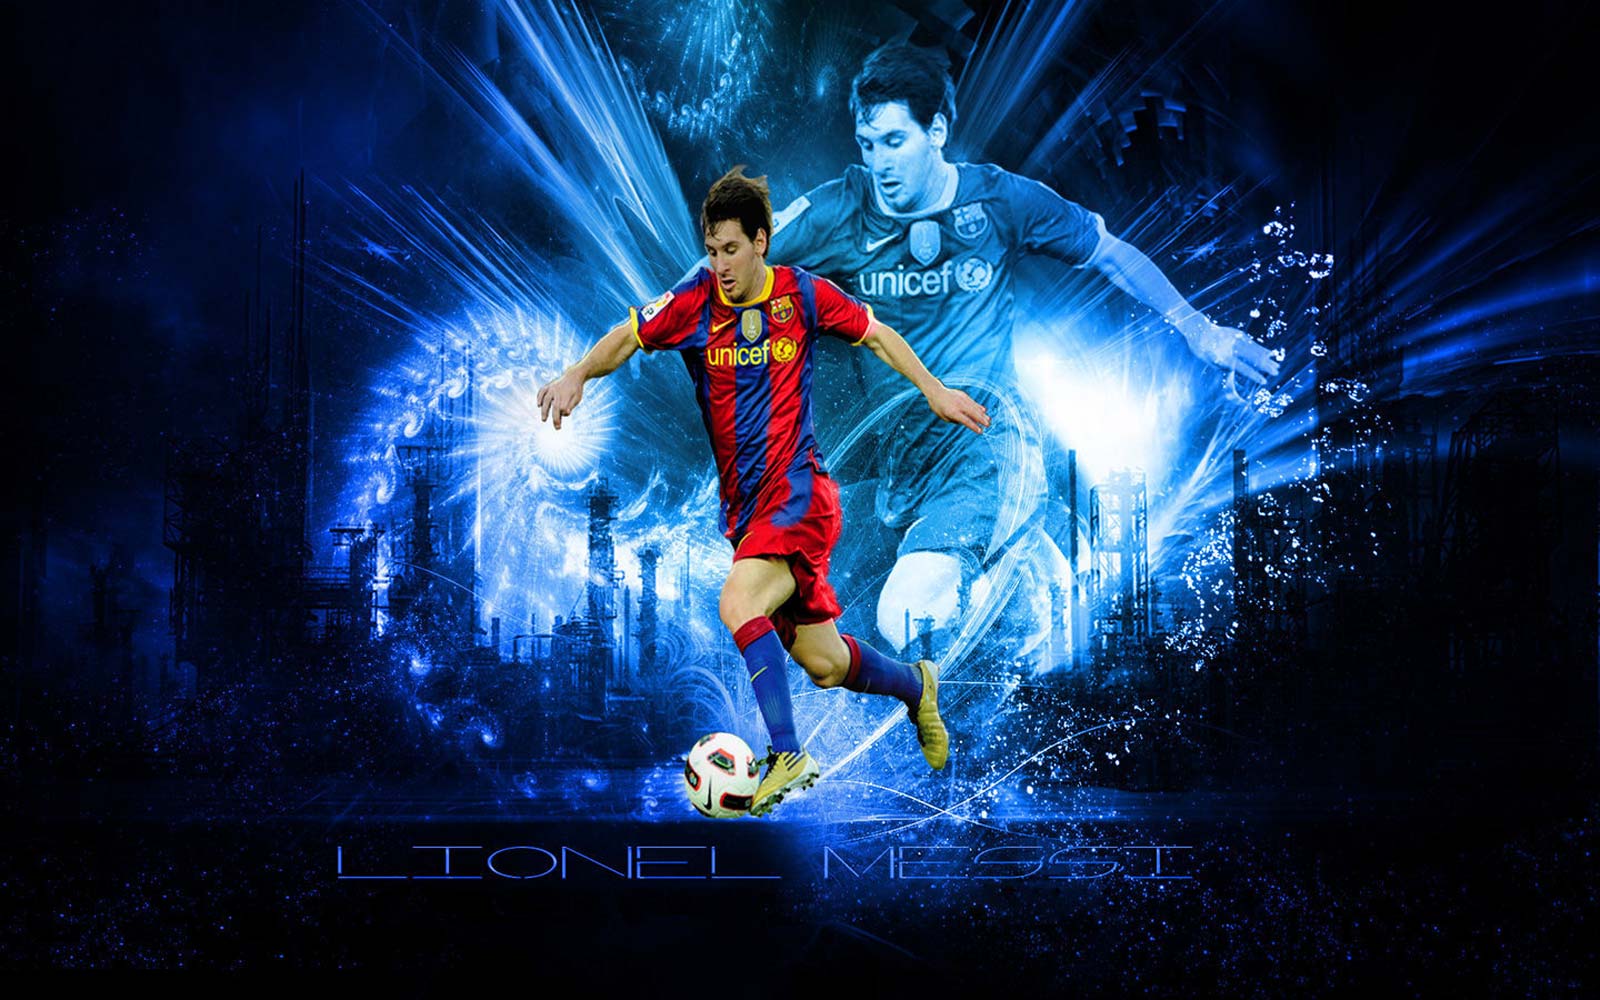 Lionel Messi 2012 Wallpaper Hd